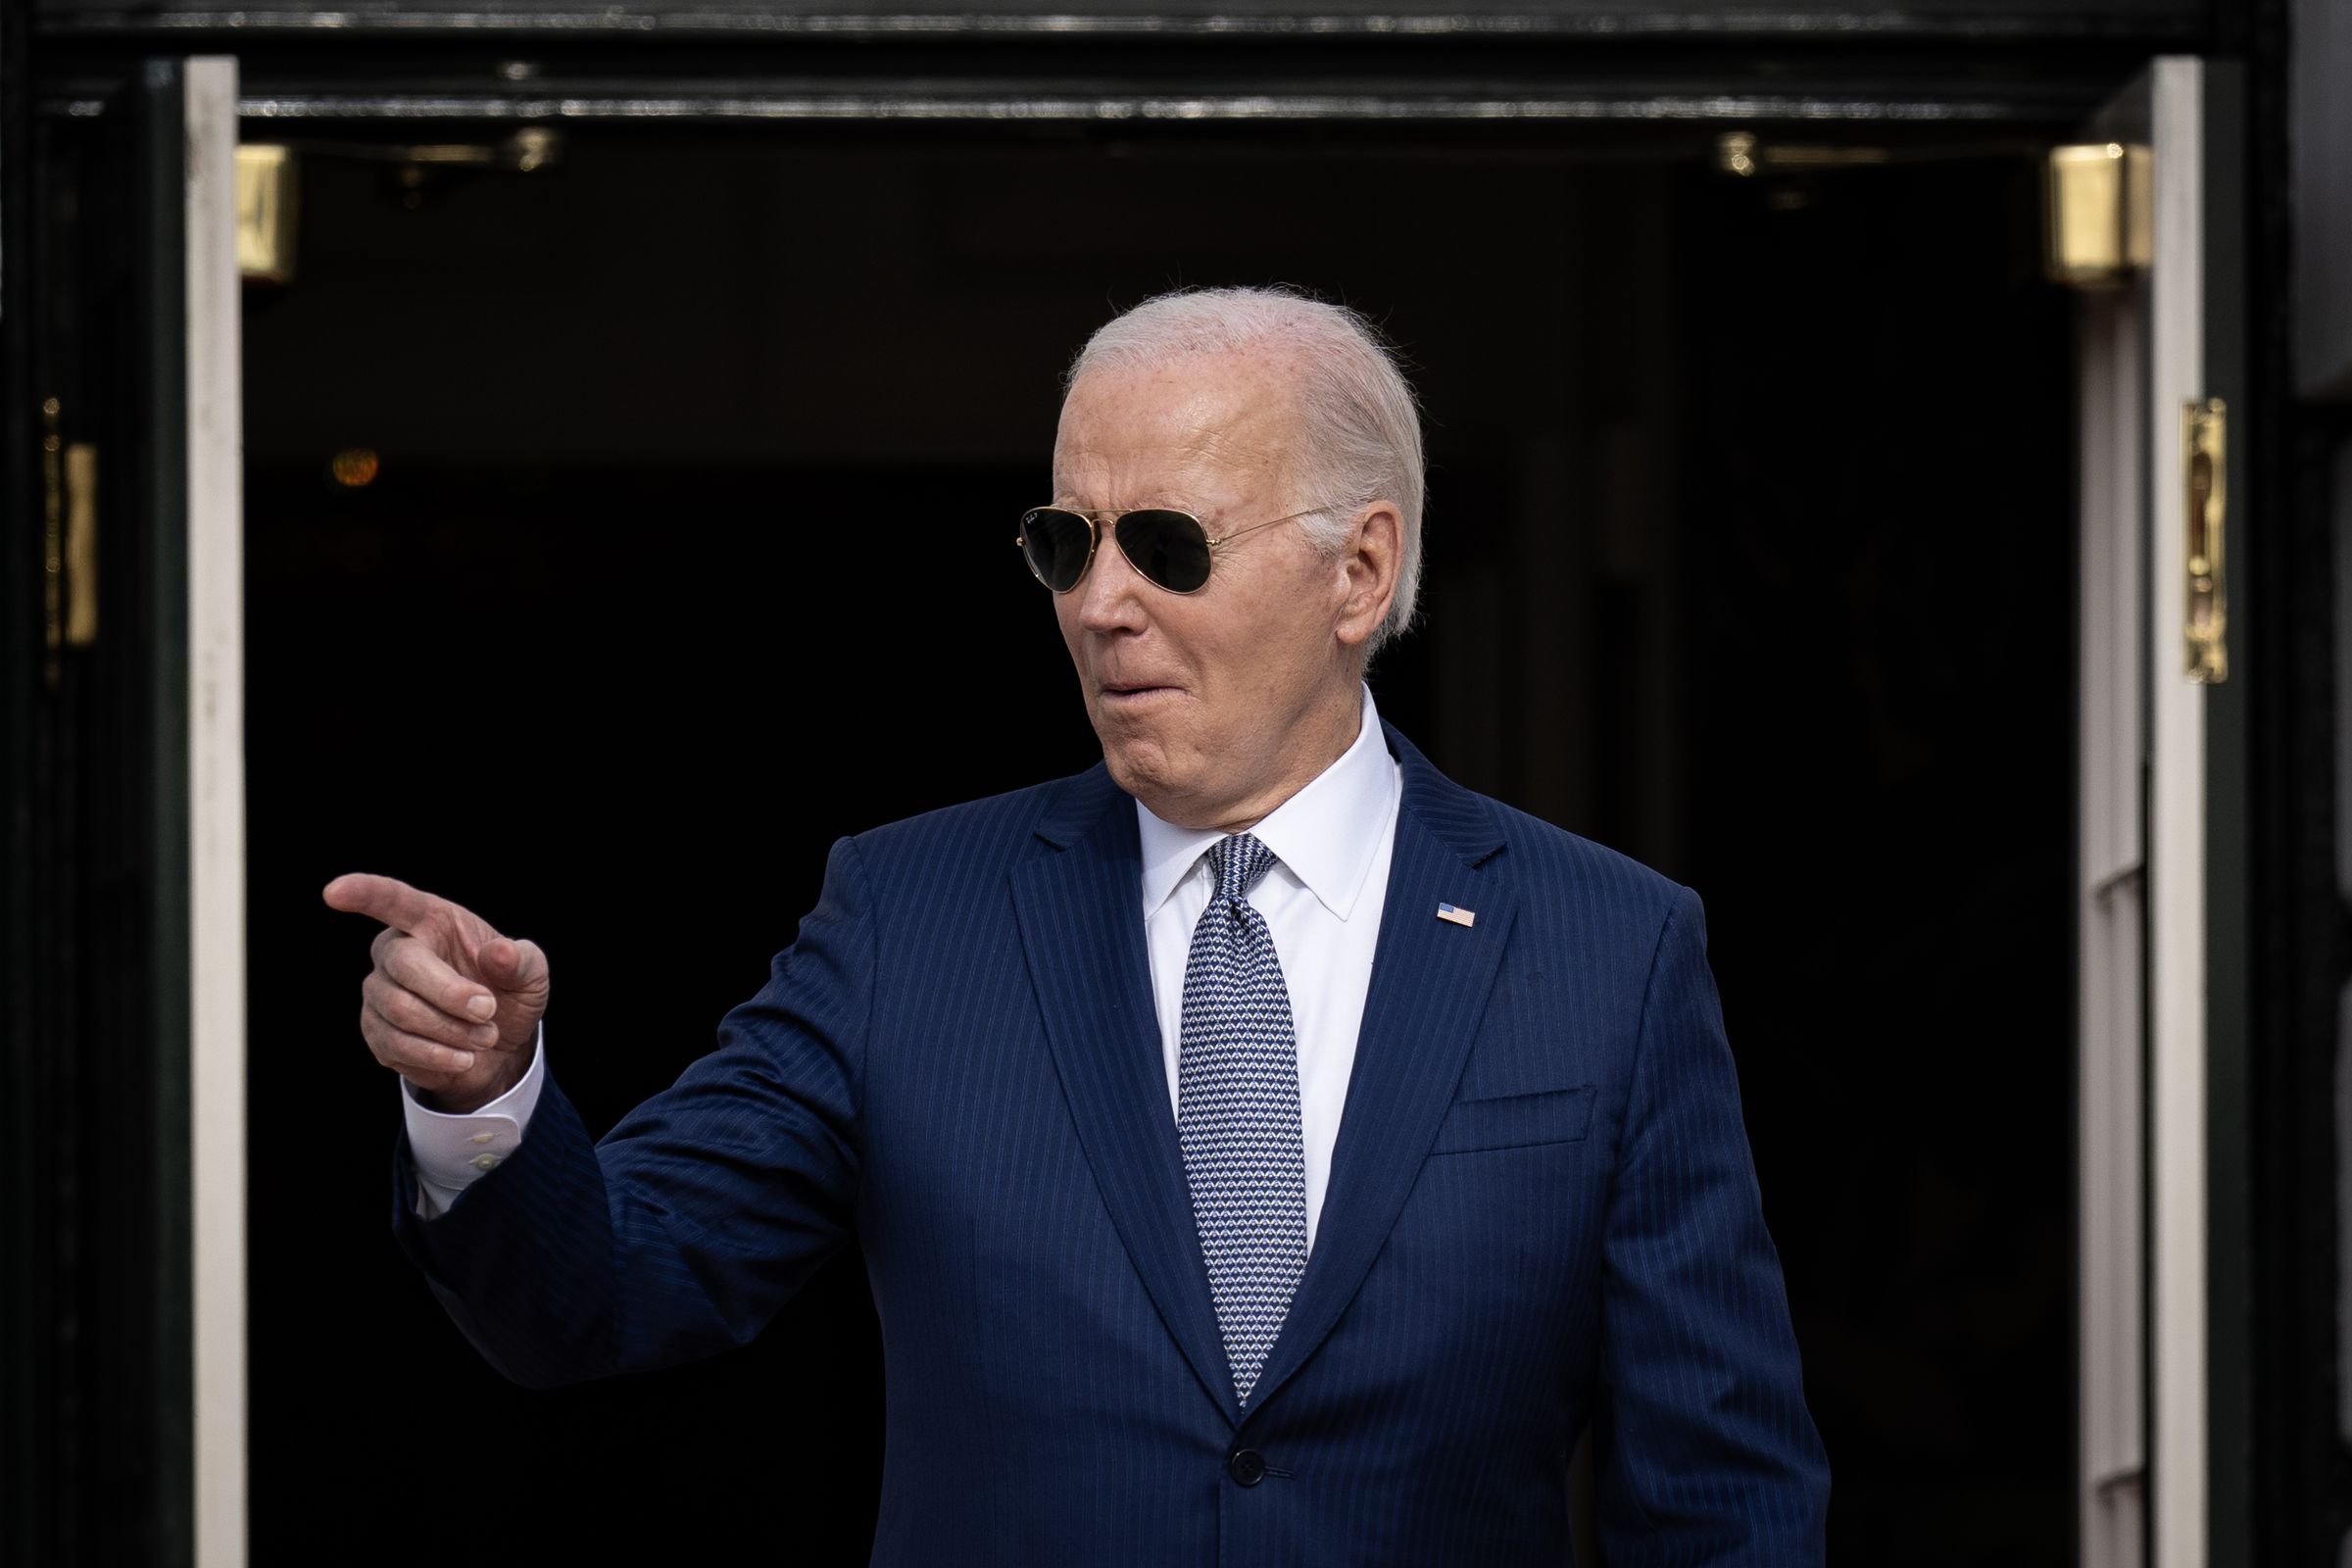 Joe Biden pointing at someone off-camera.